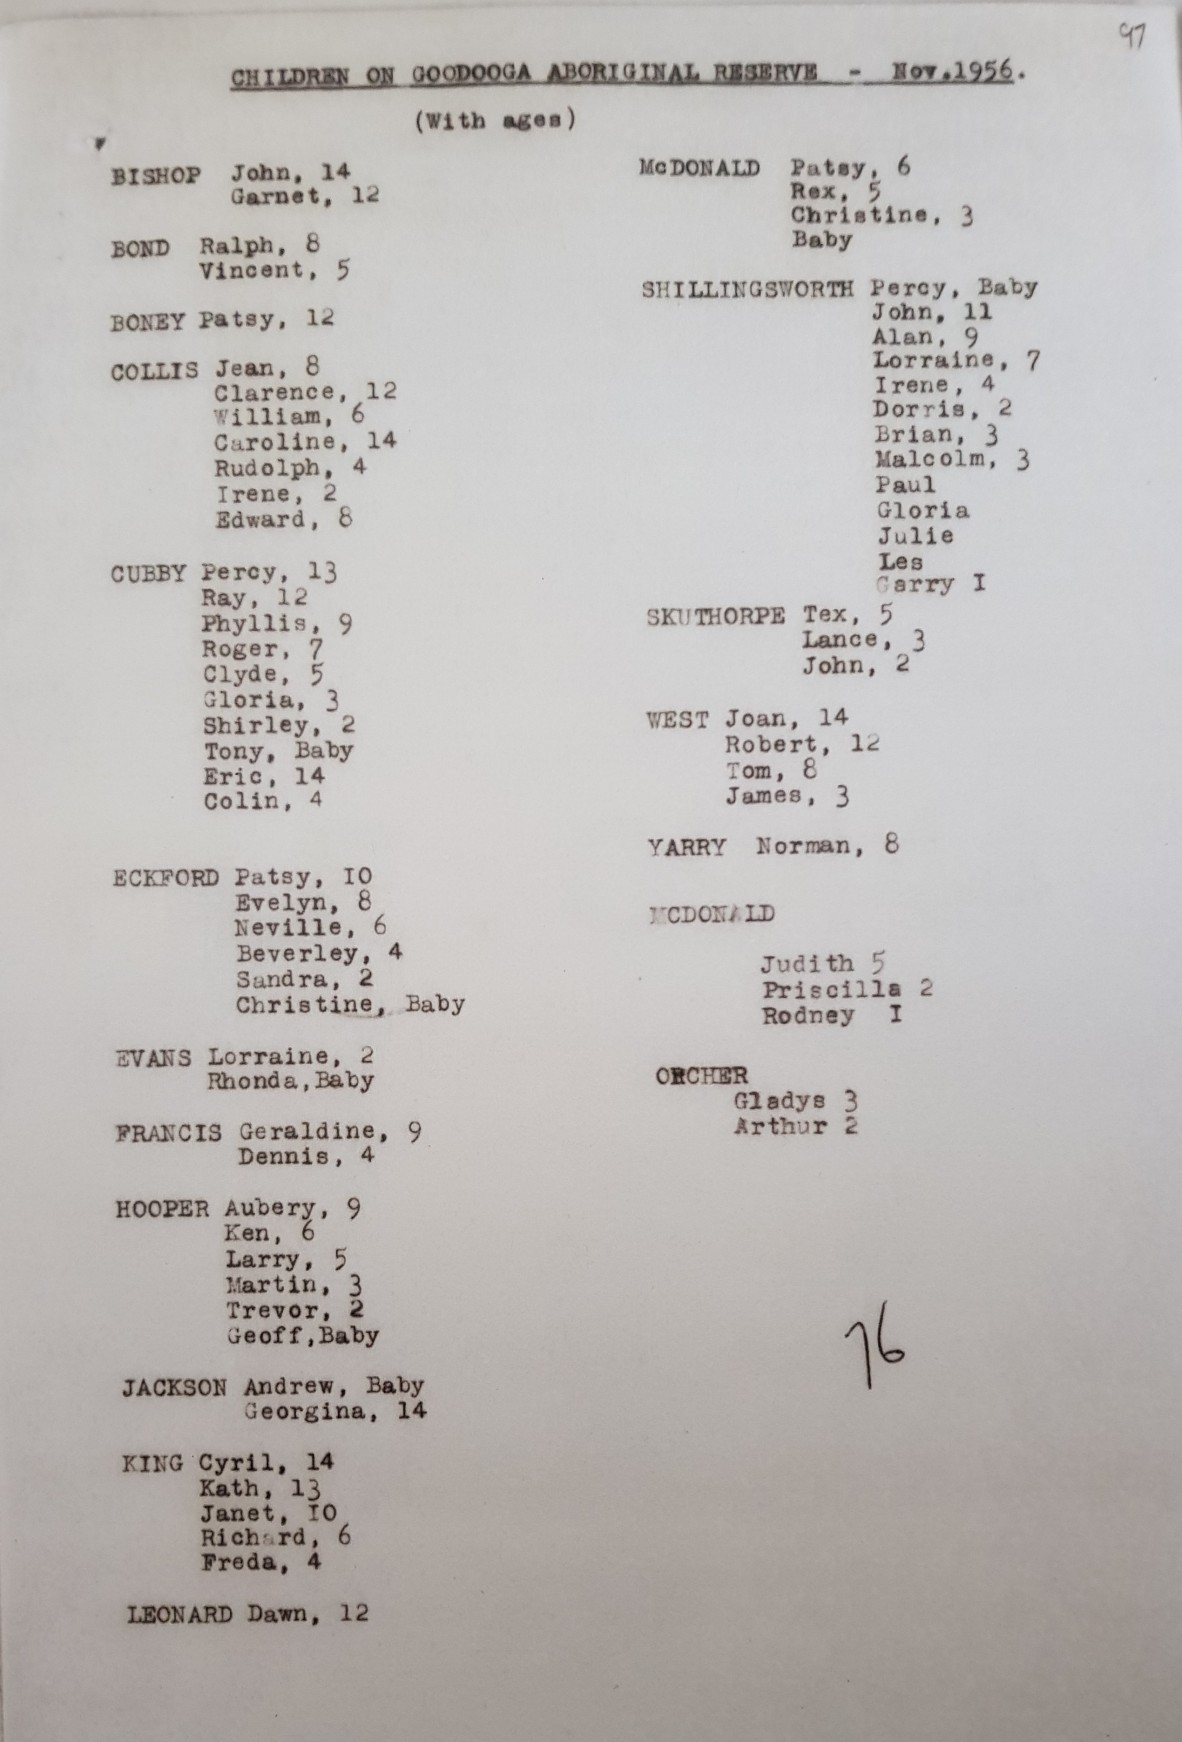 List of children on Goodooga Aboriginal Reserve - November, 1956.